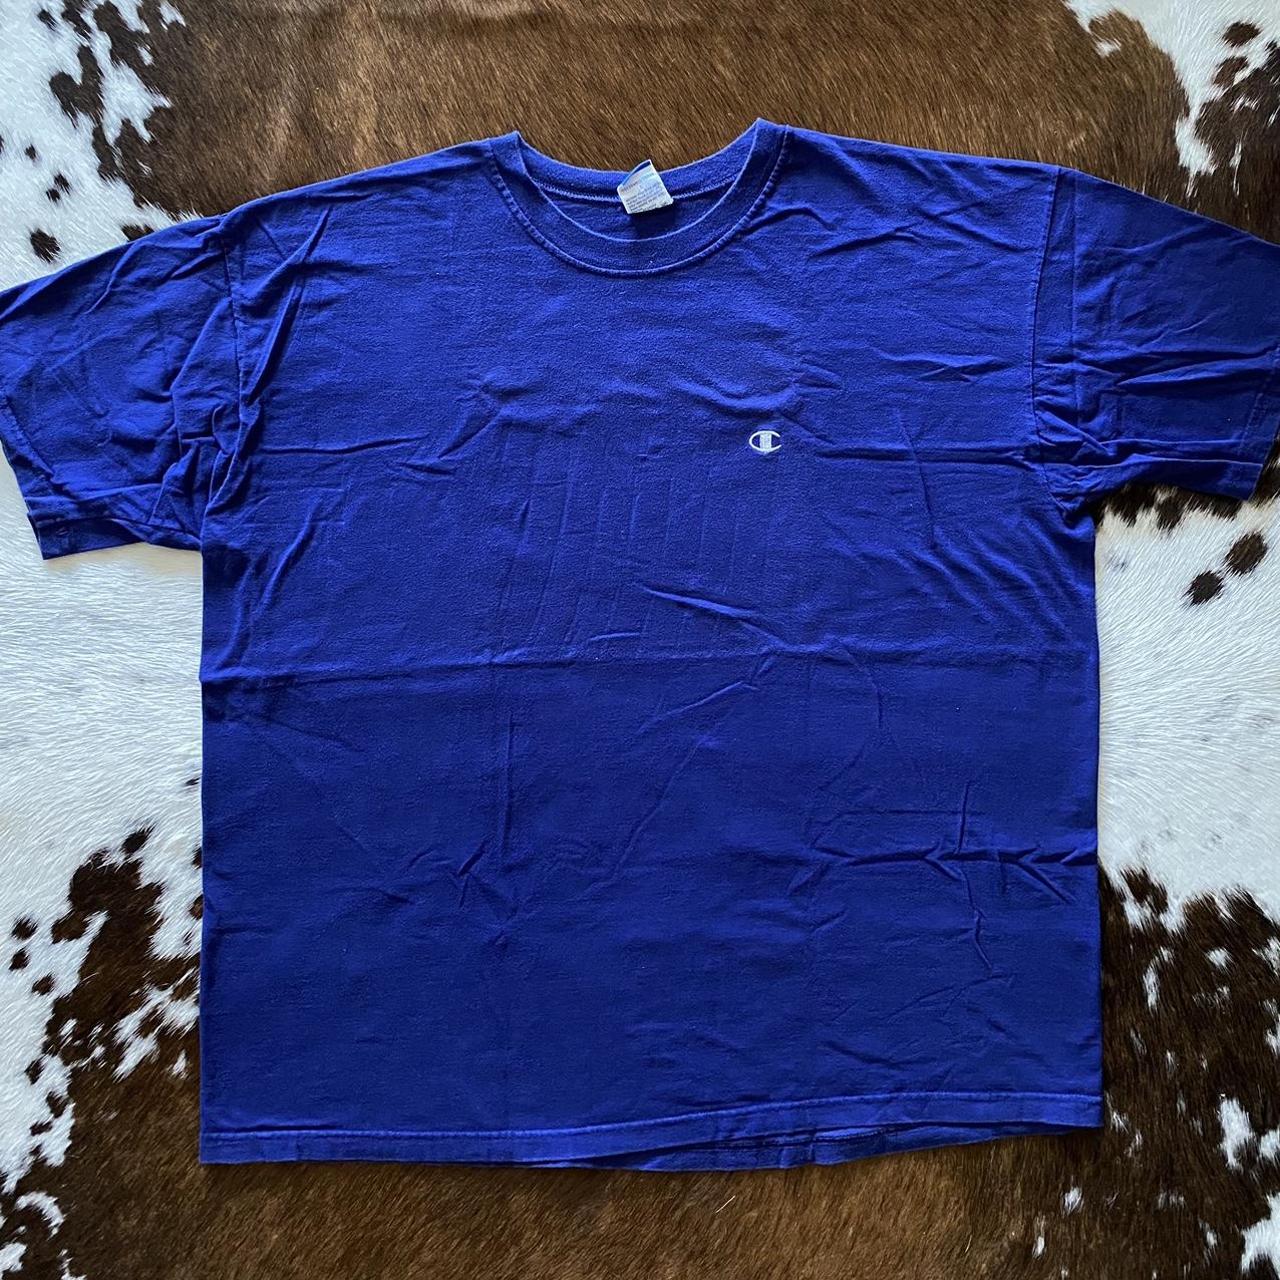 blue champion shirt size xl embroidered logo #champion - Depop